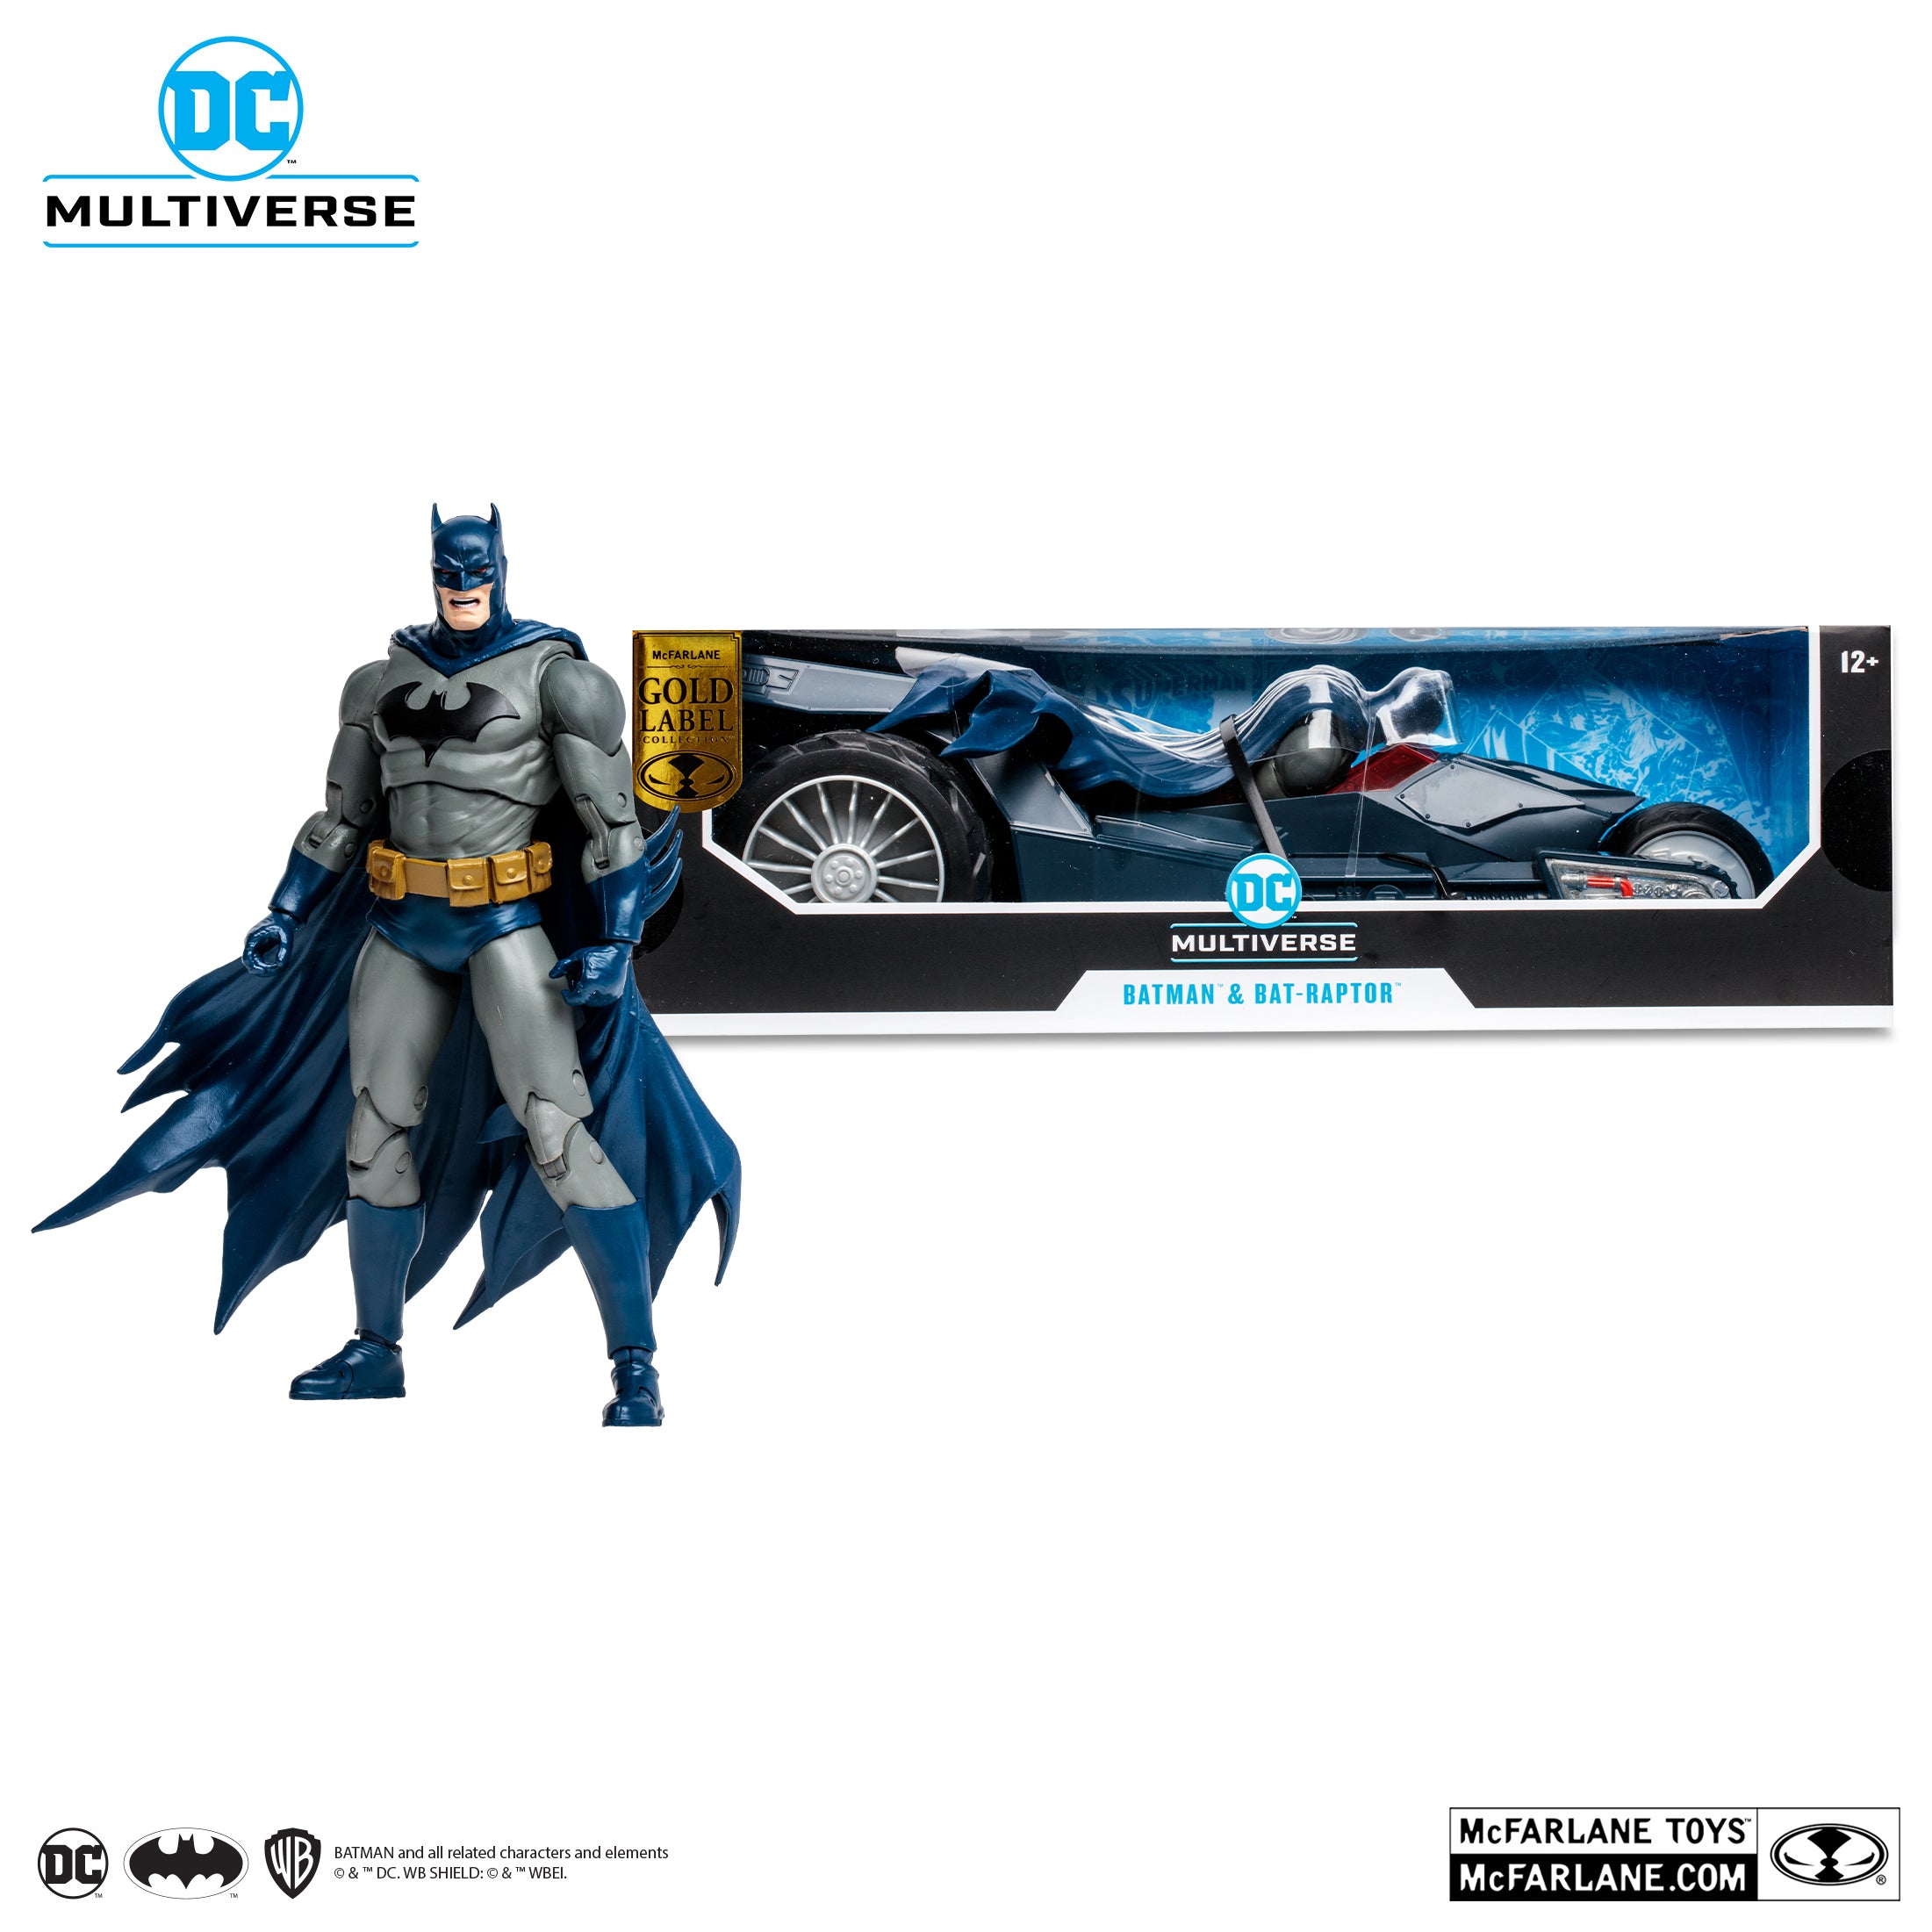 DC Multiverse - McFarlane Toys - The Batman Who Laughs - Batman & Bat-Raptor